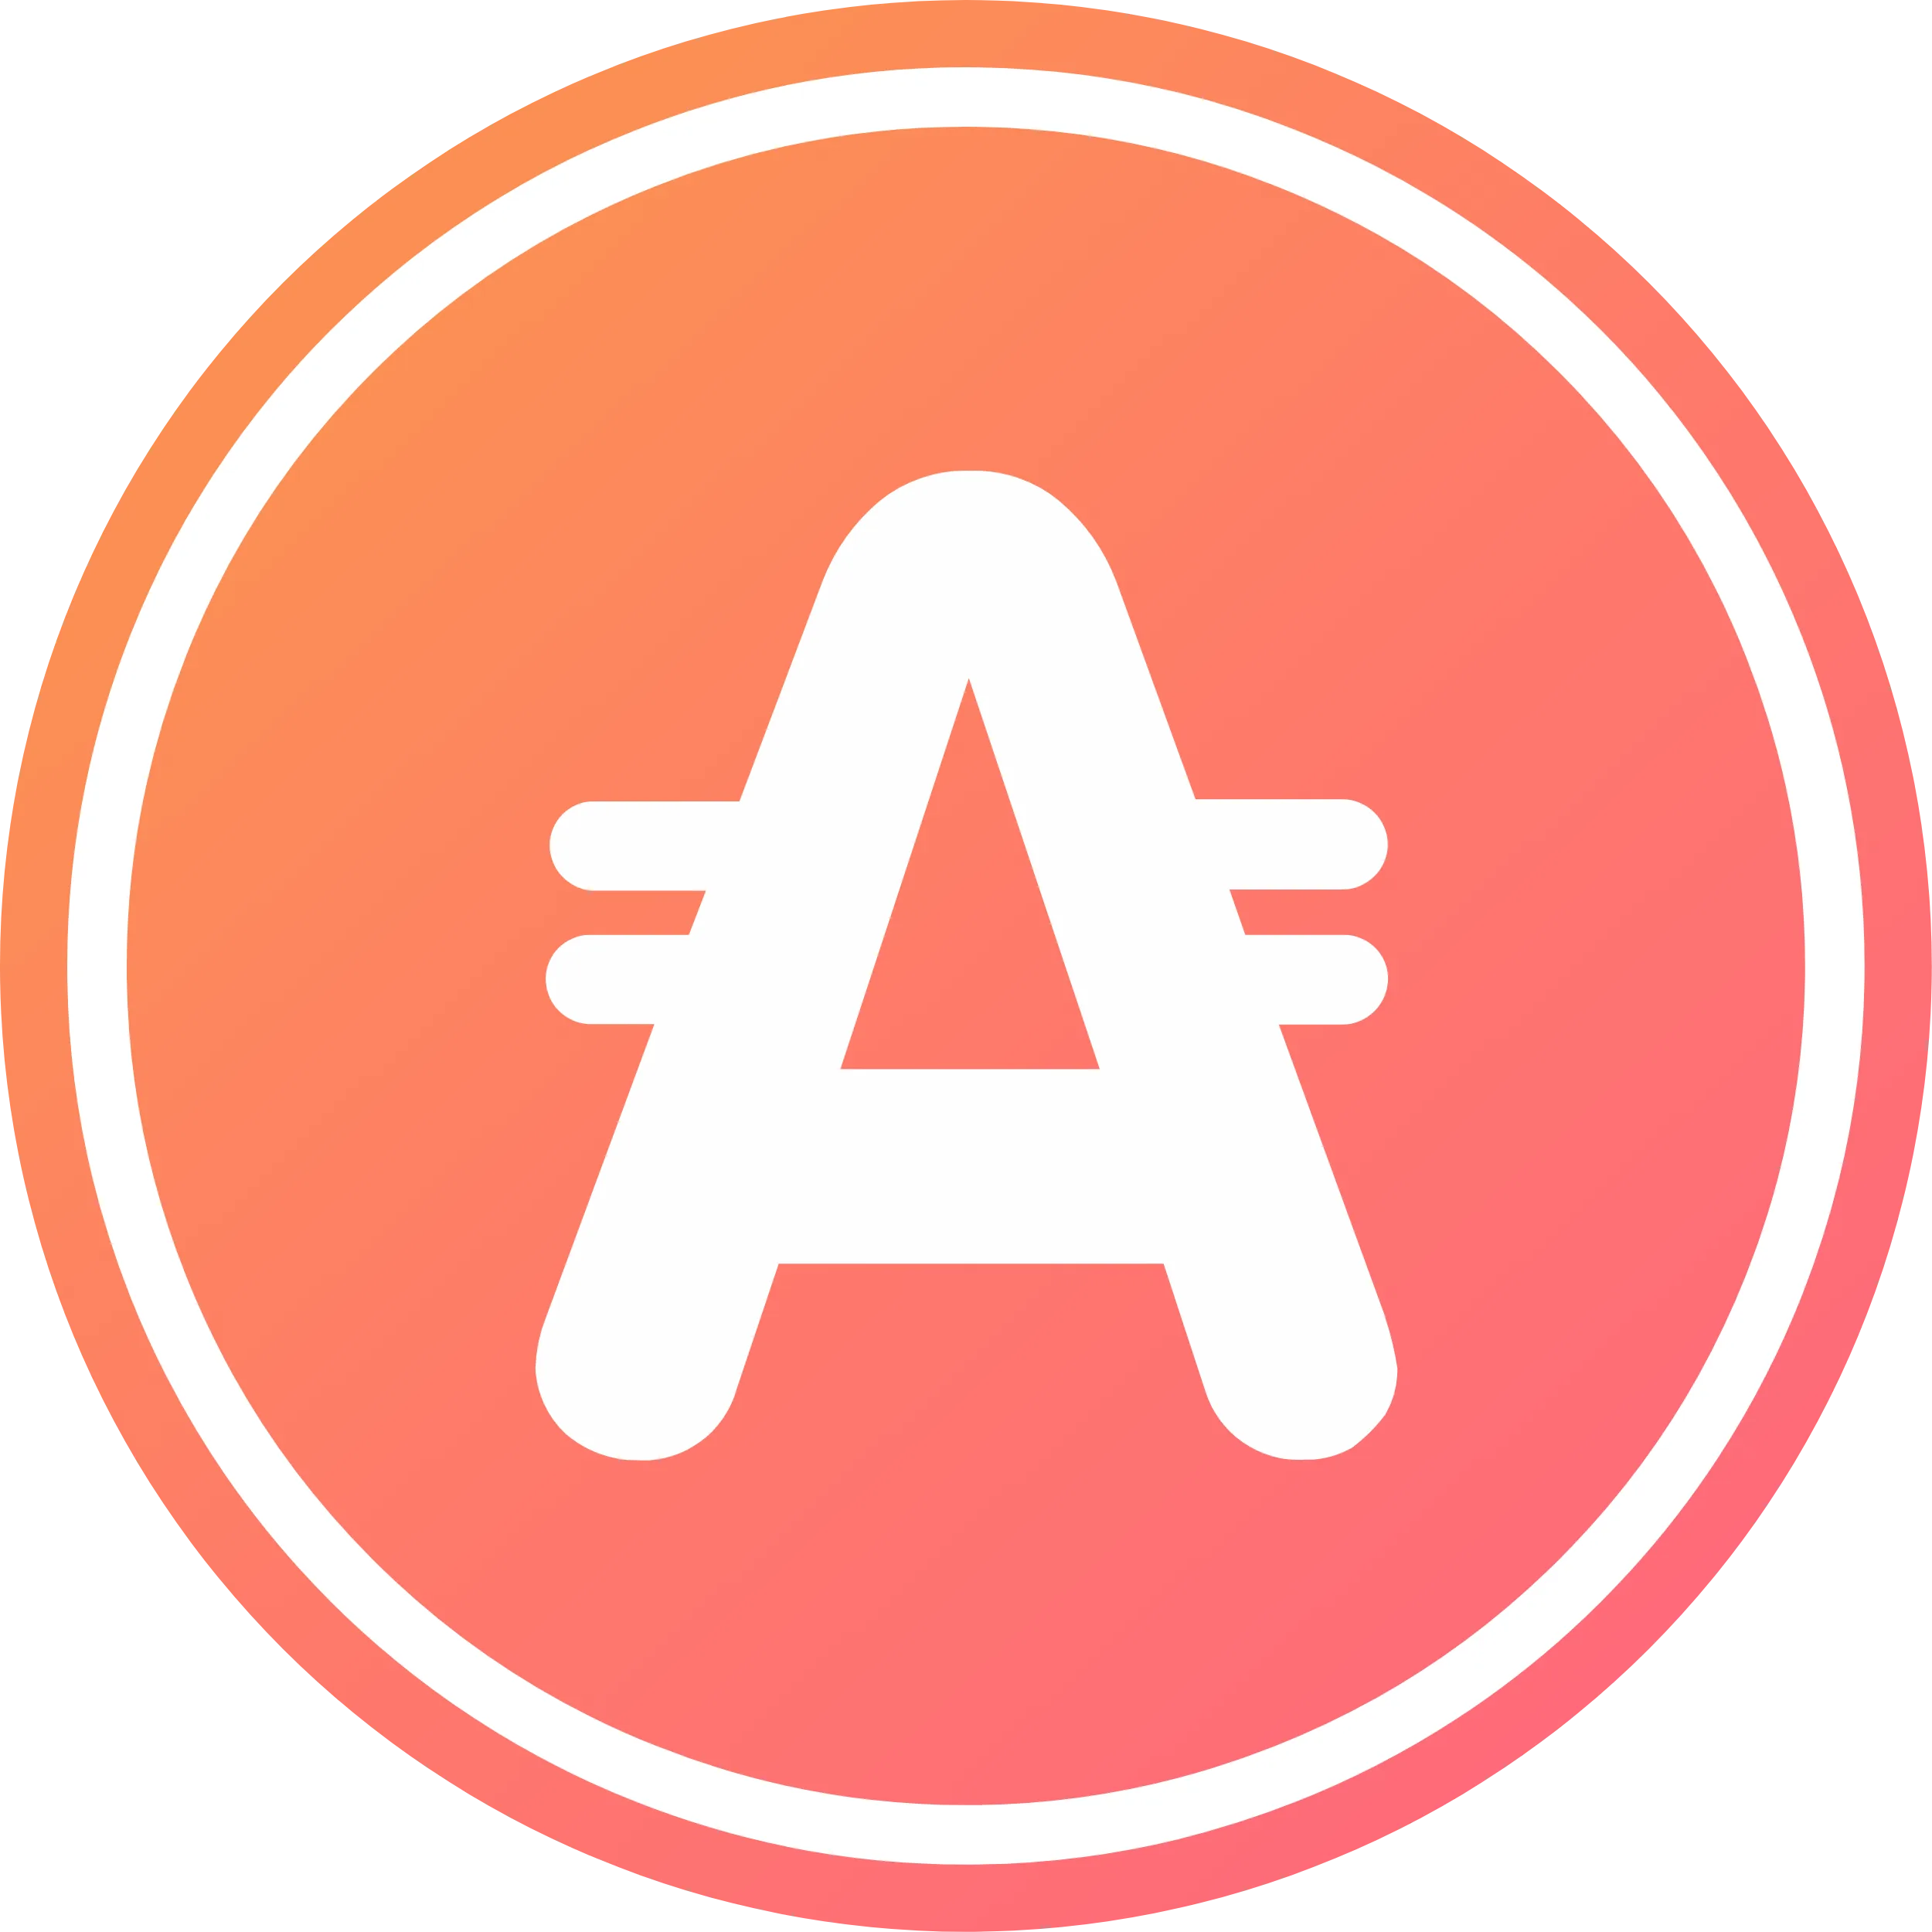 AppCoins logo in svg format